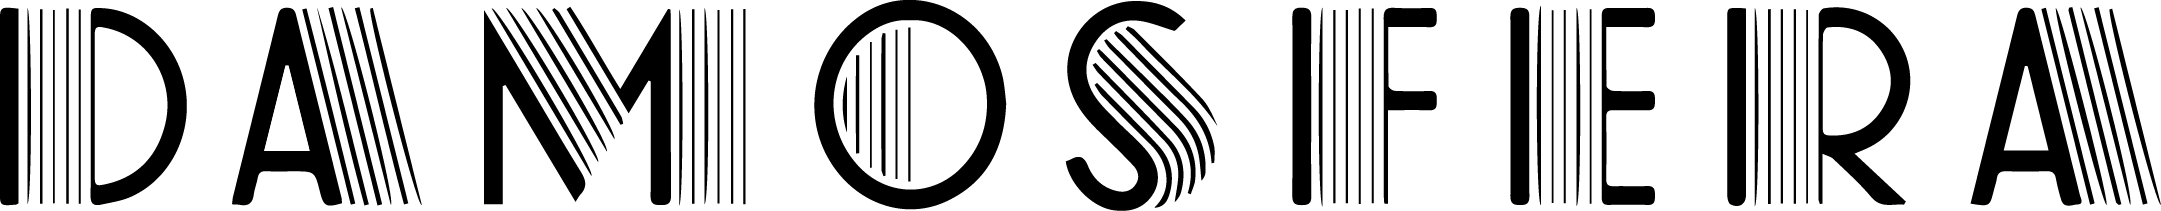 logo-1-jpg